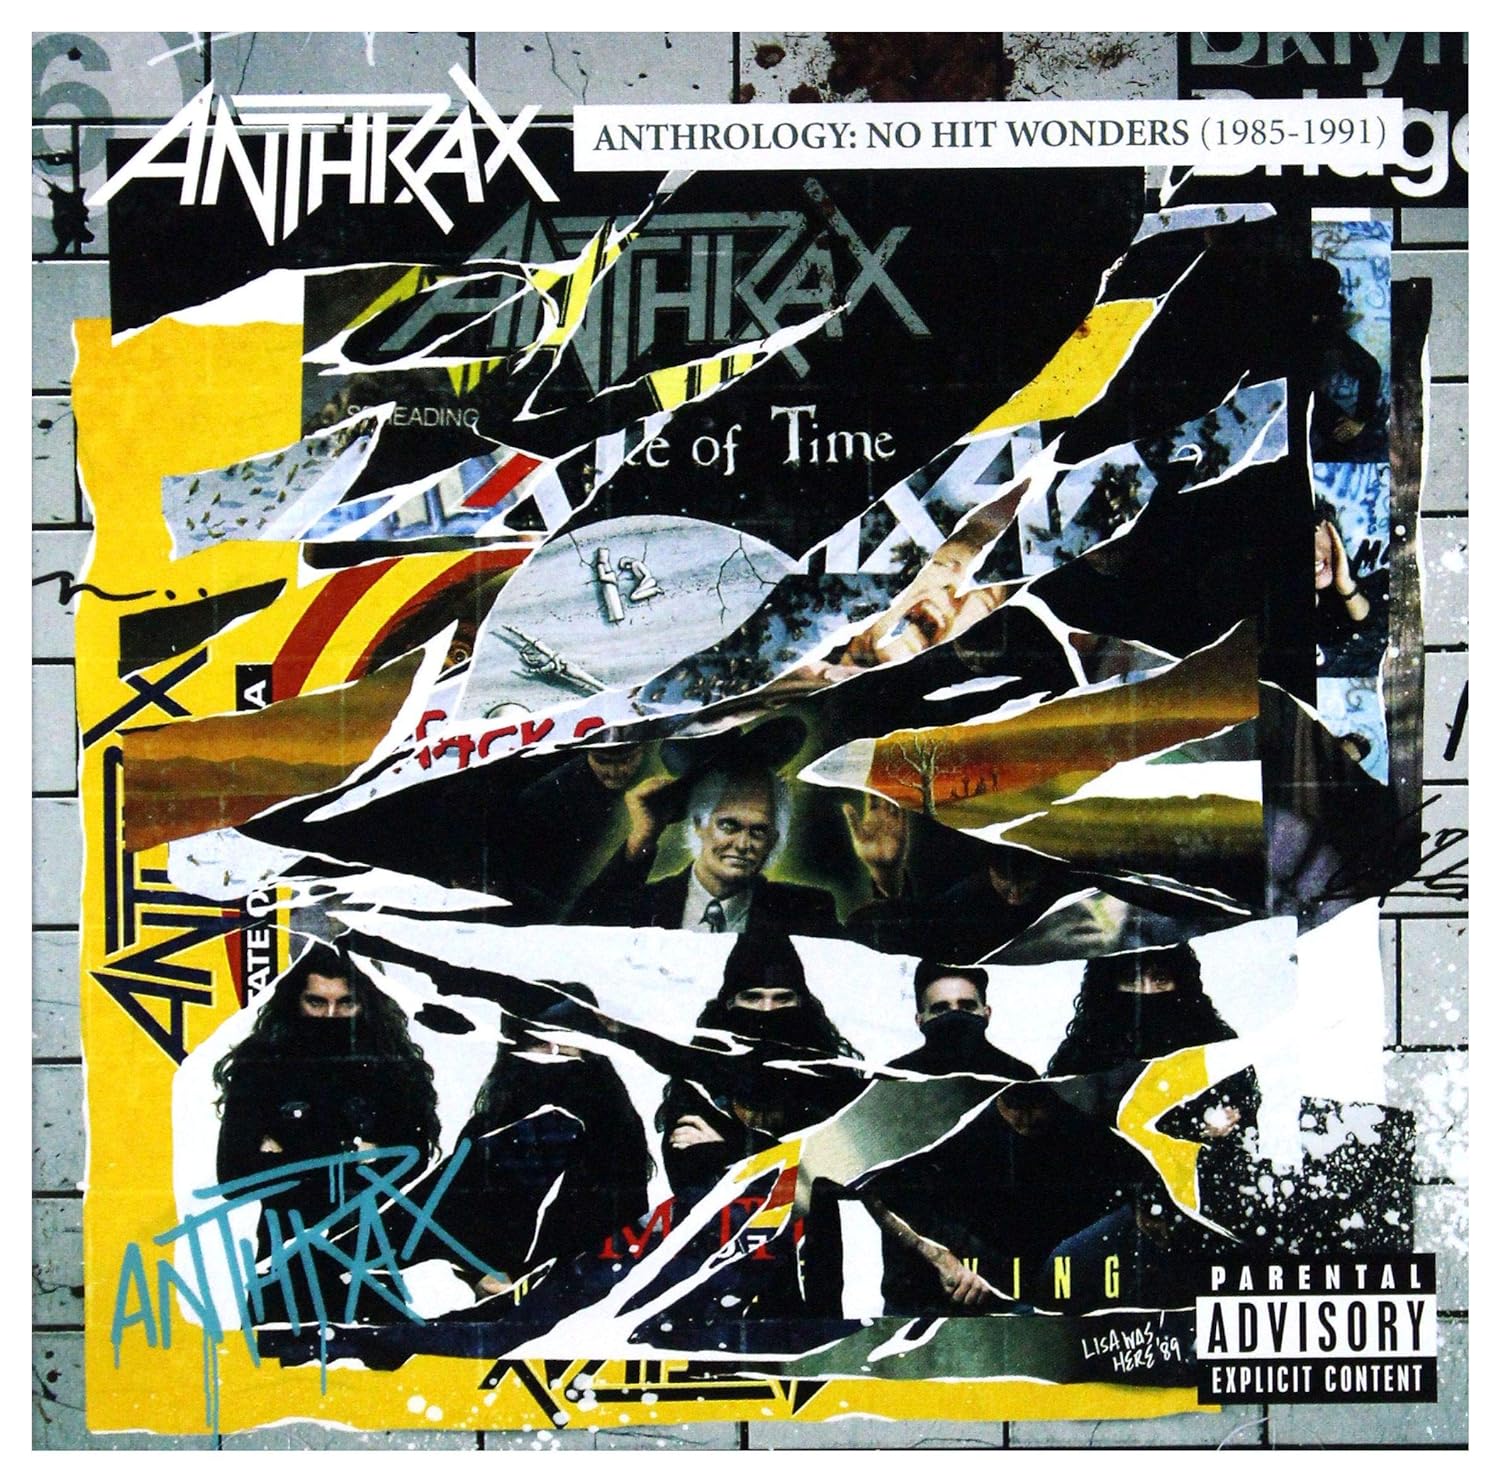 ANTHRAX – ANTHROLOGY:NO HIT WONDERS 1985-1991 CD2